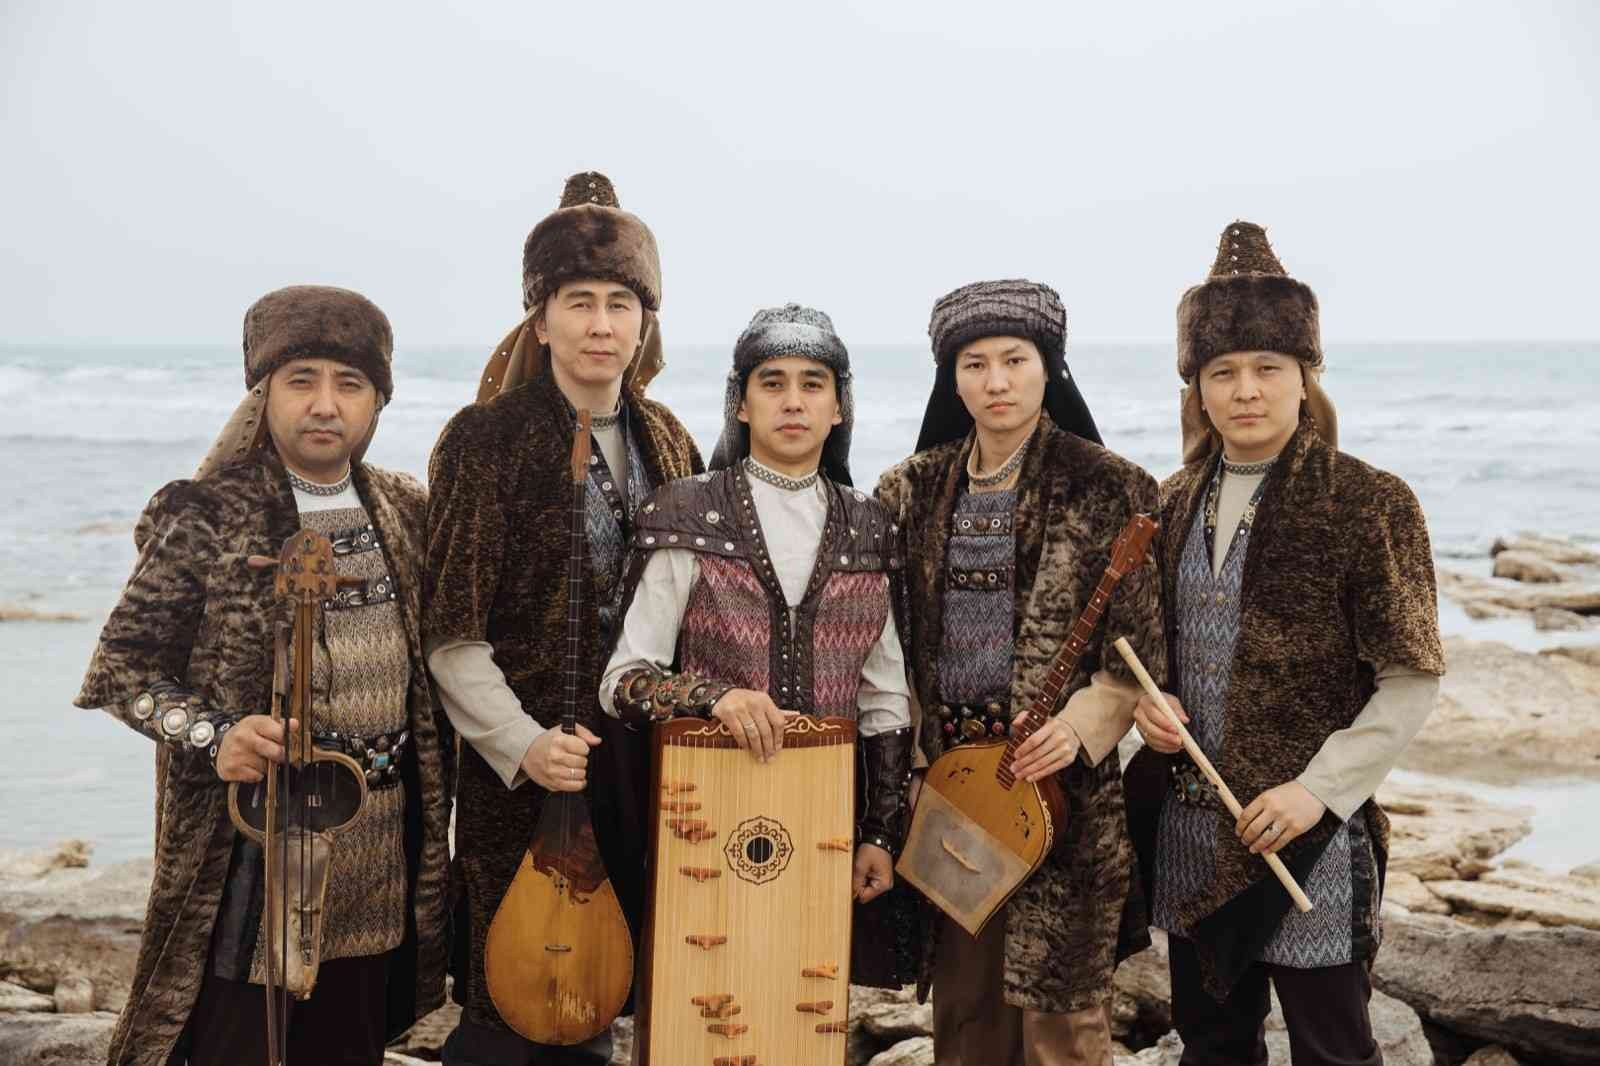 turan ethno folk band mersin uluslararasi muzik festivalinde sahne alacak c7f88eb